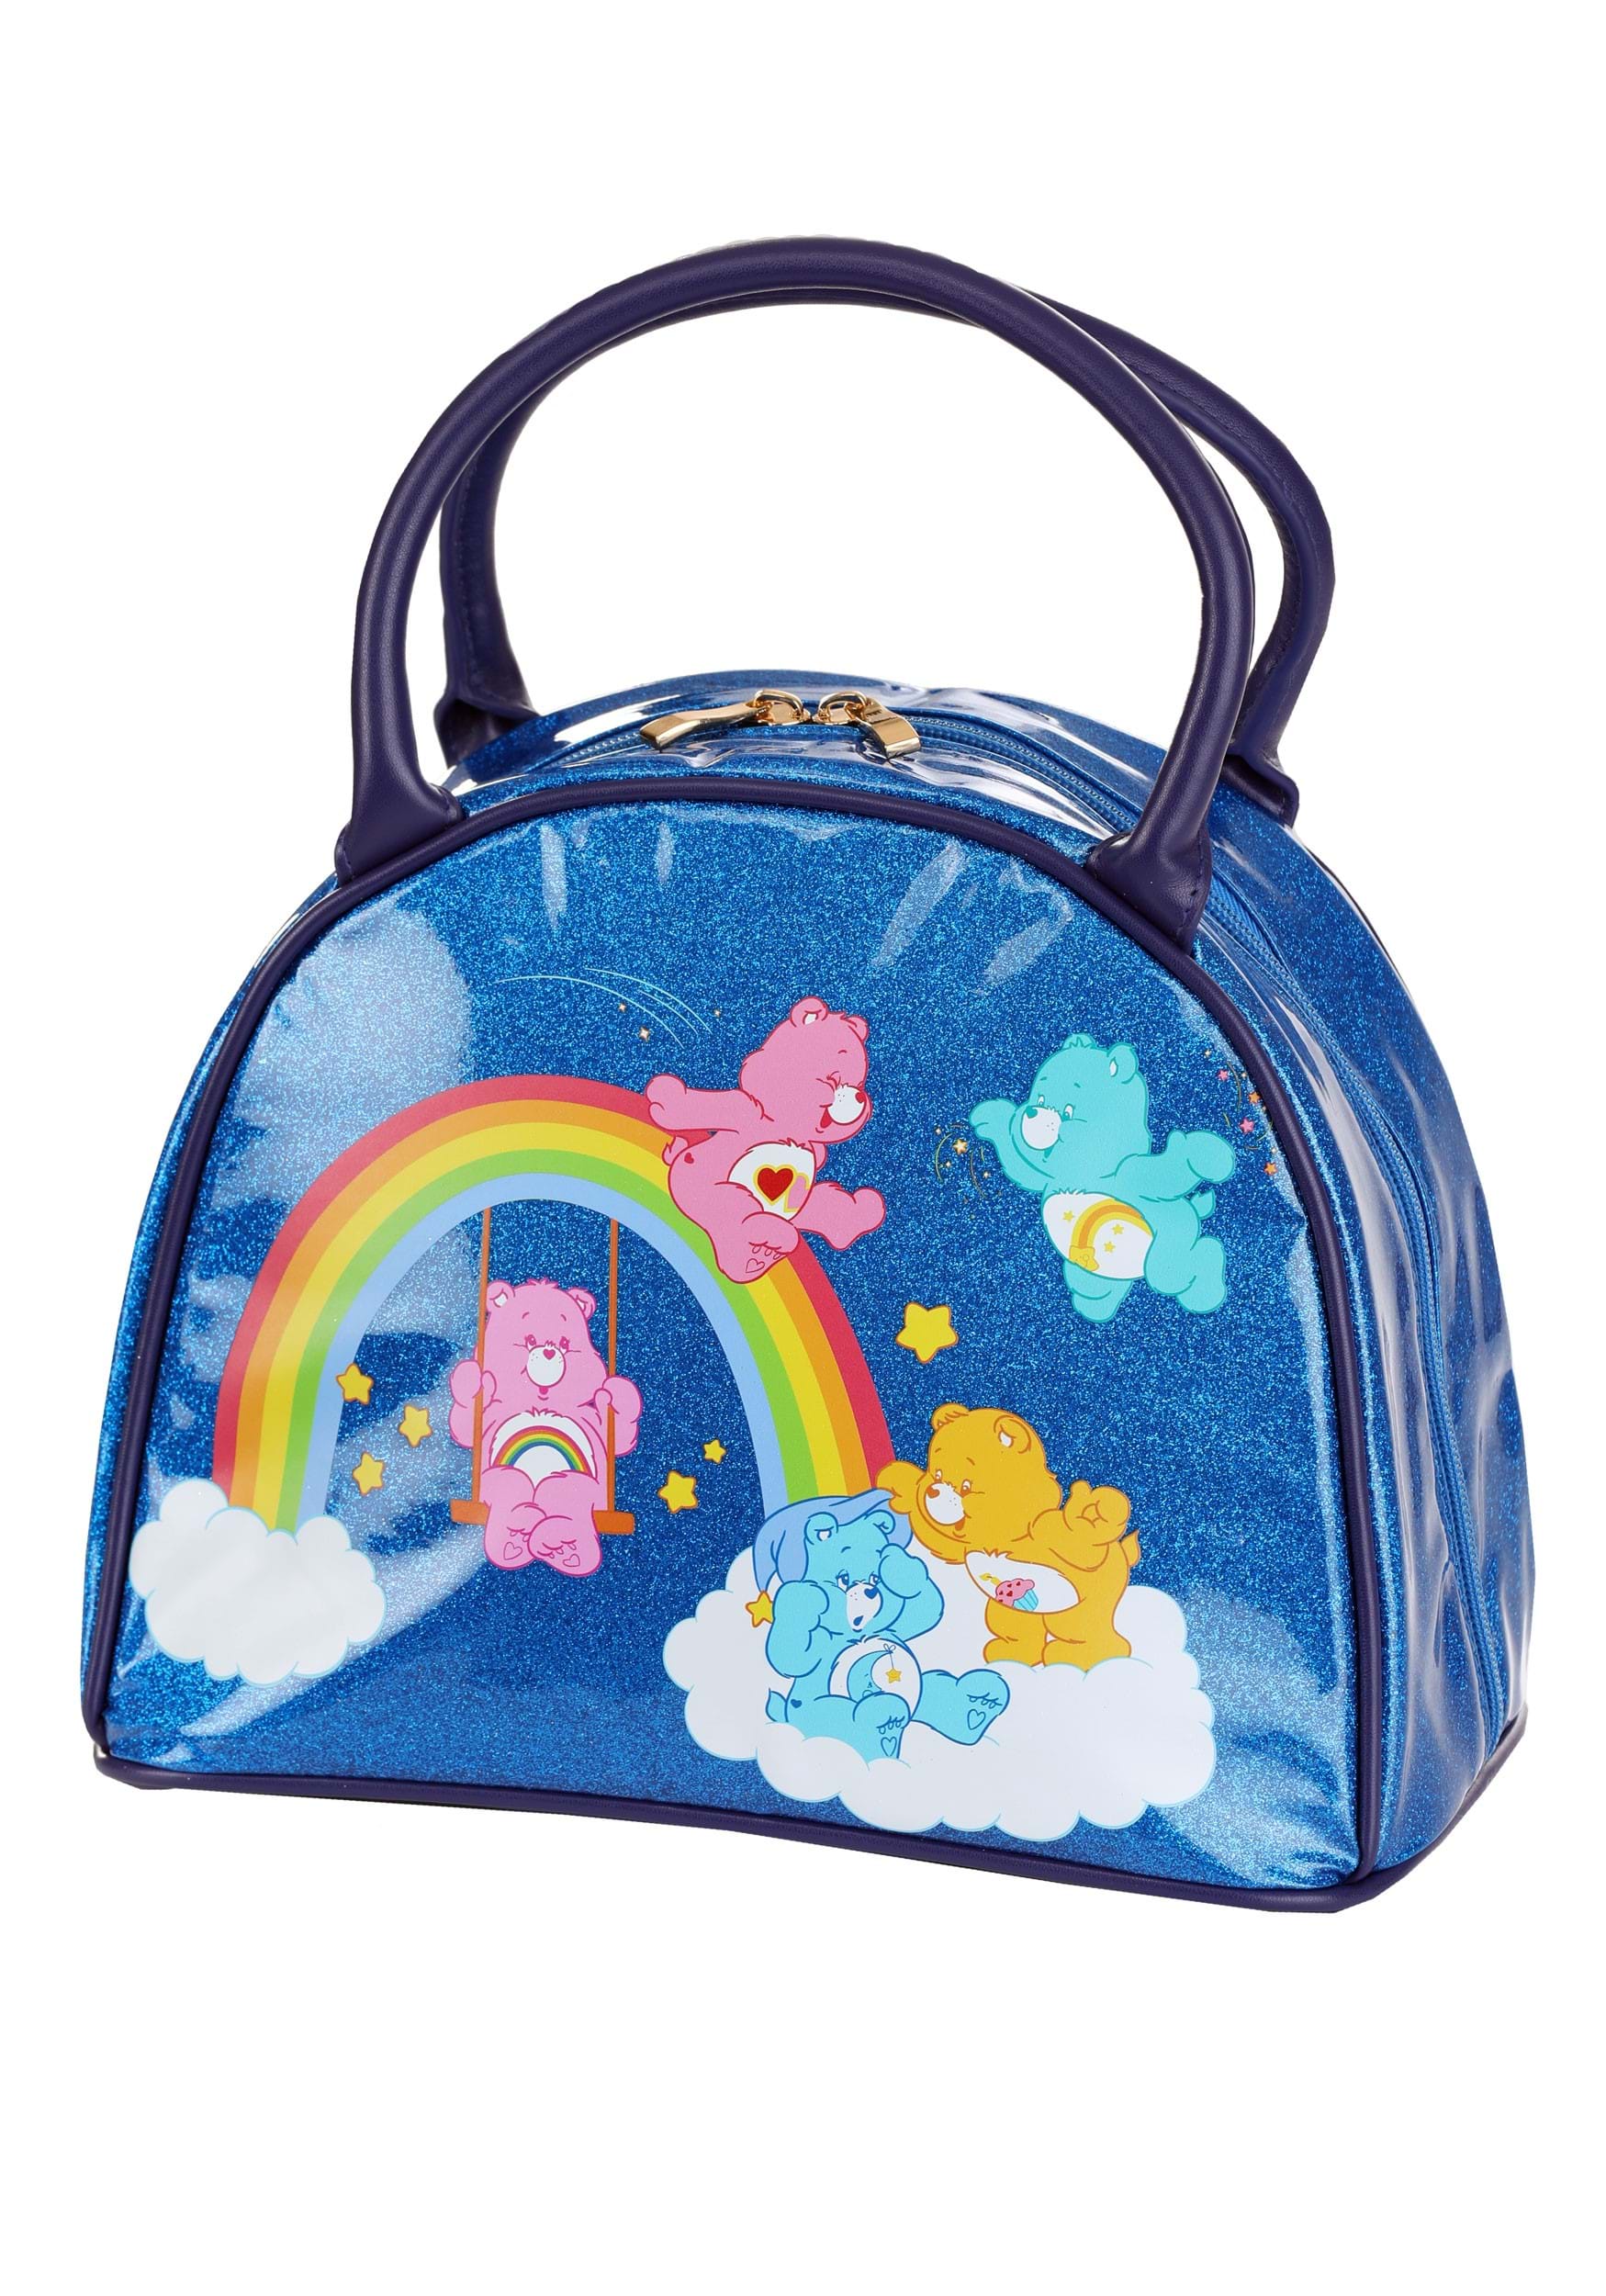 Care Bears Rainbow Playtime Purse , Care Bears Bags & Backpacks